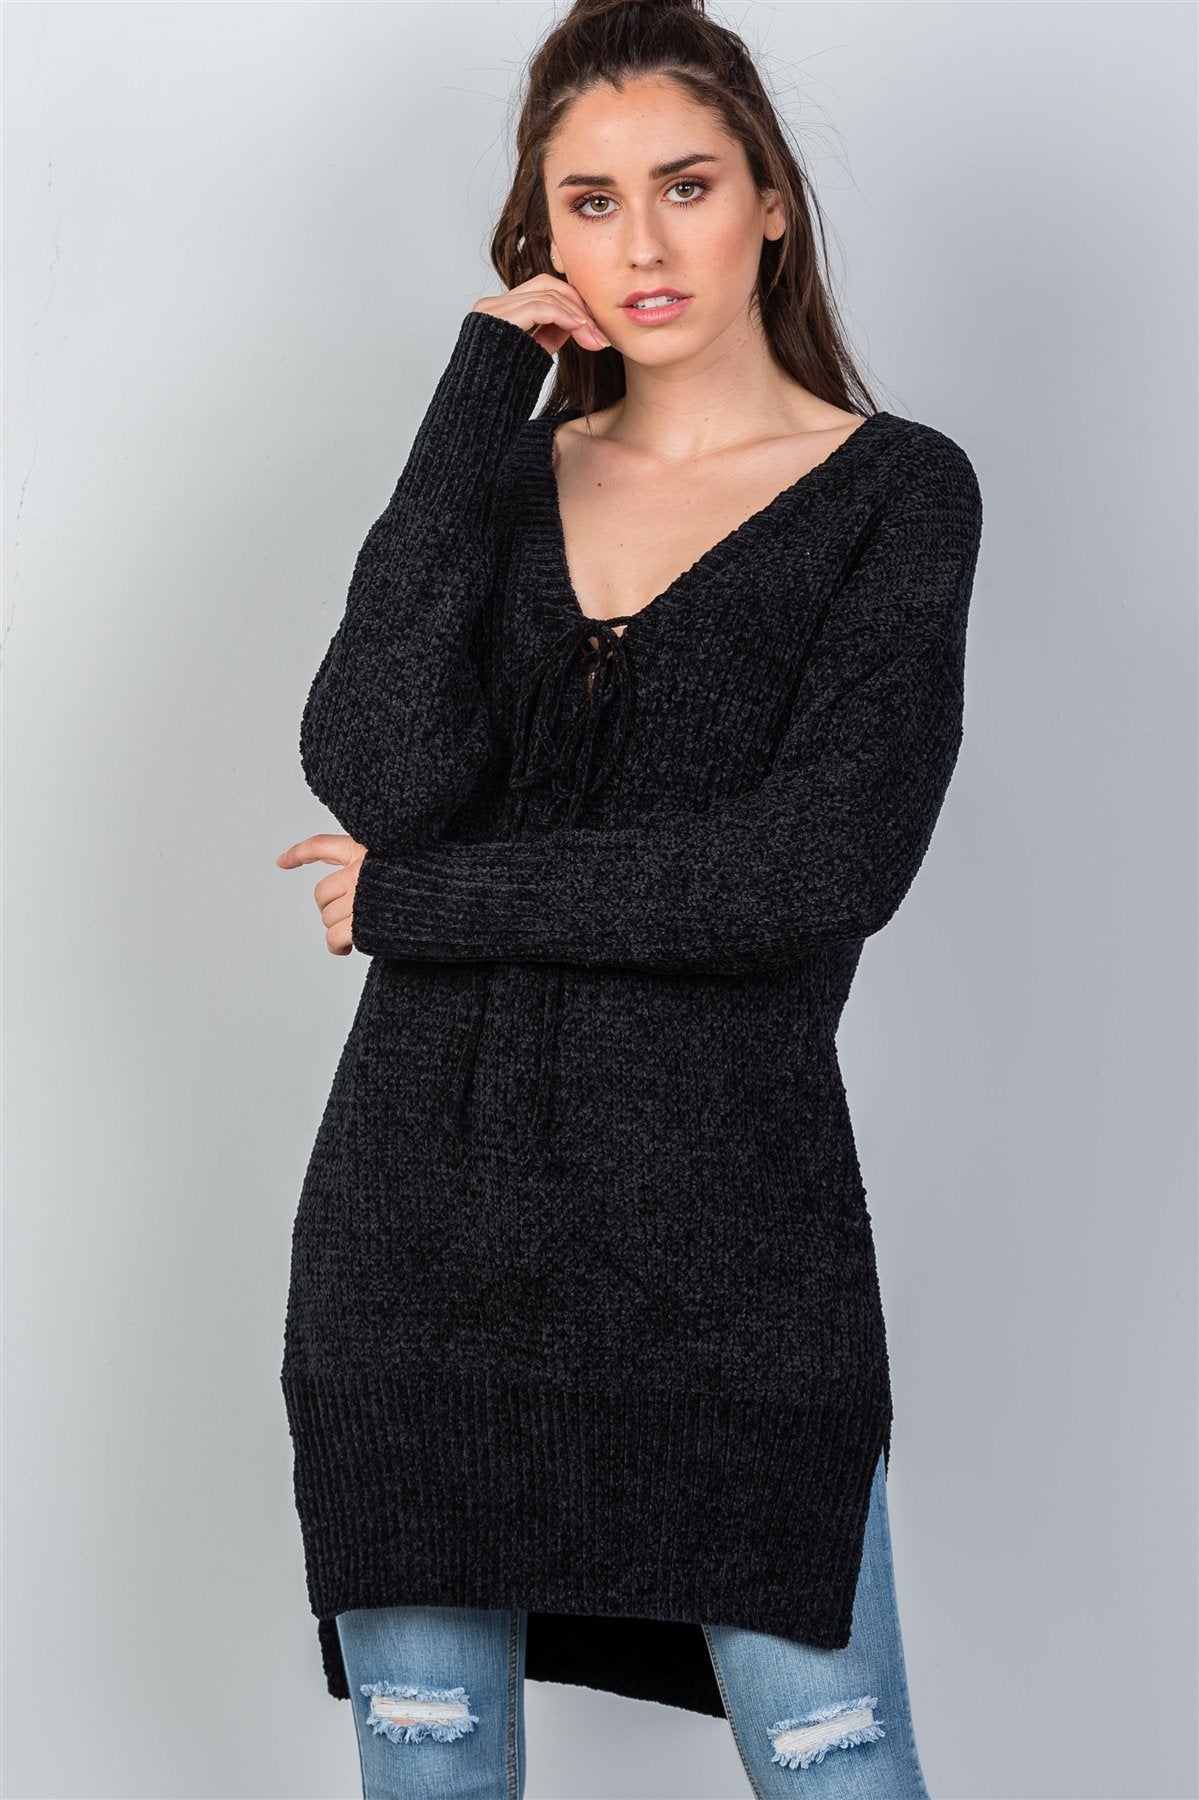 Ladies fashion black keyhole choker sweater dress